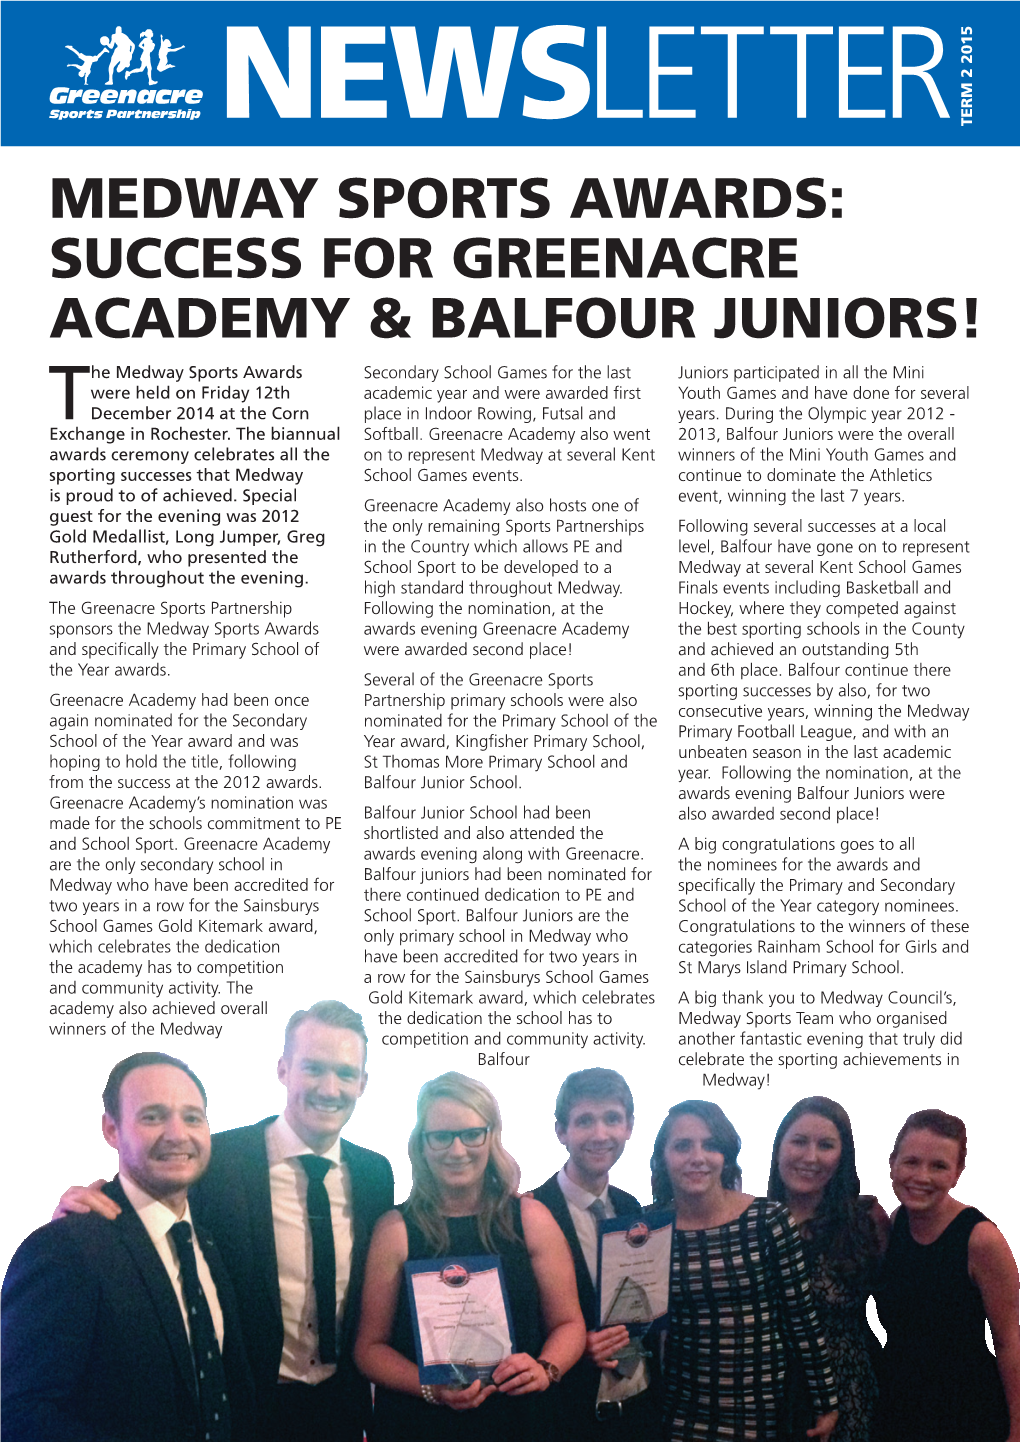 Success for Greenacre Academy & Balfour Juniors!